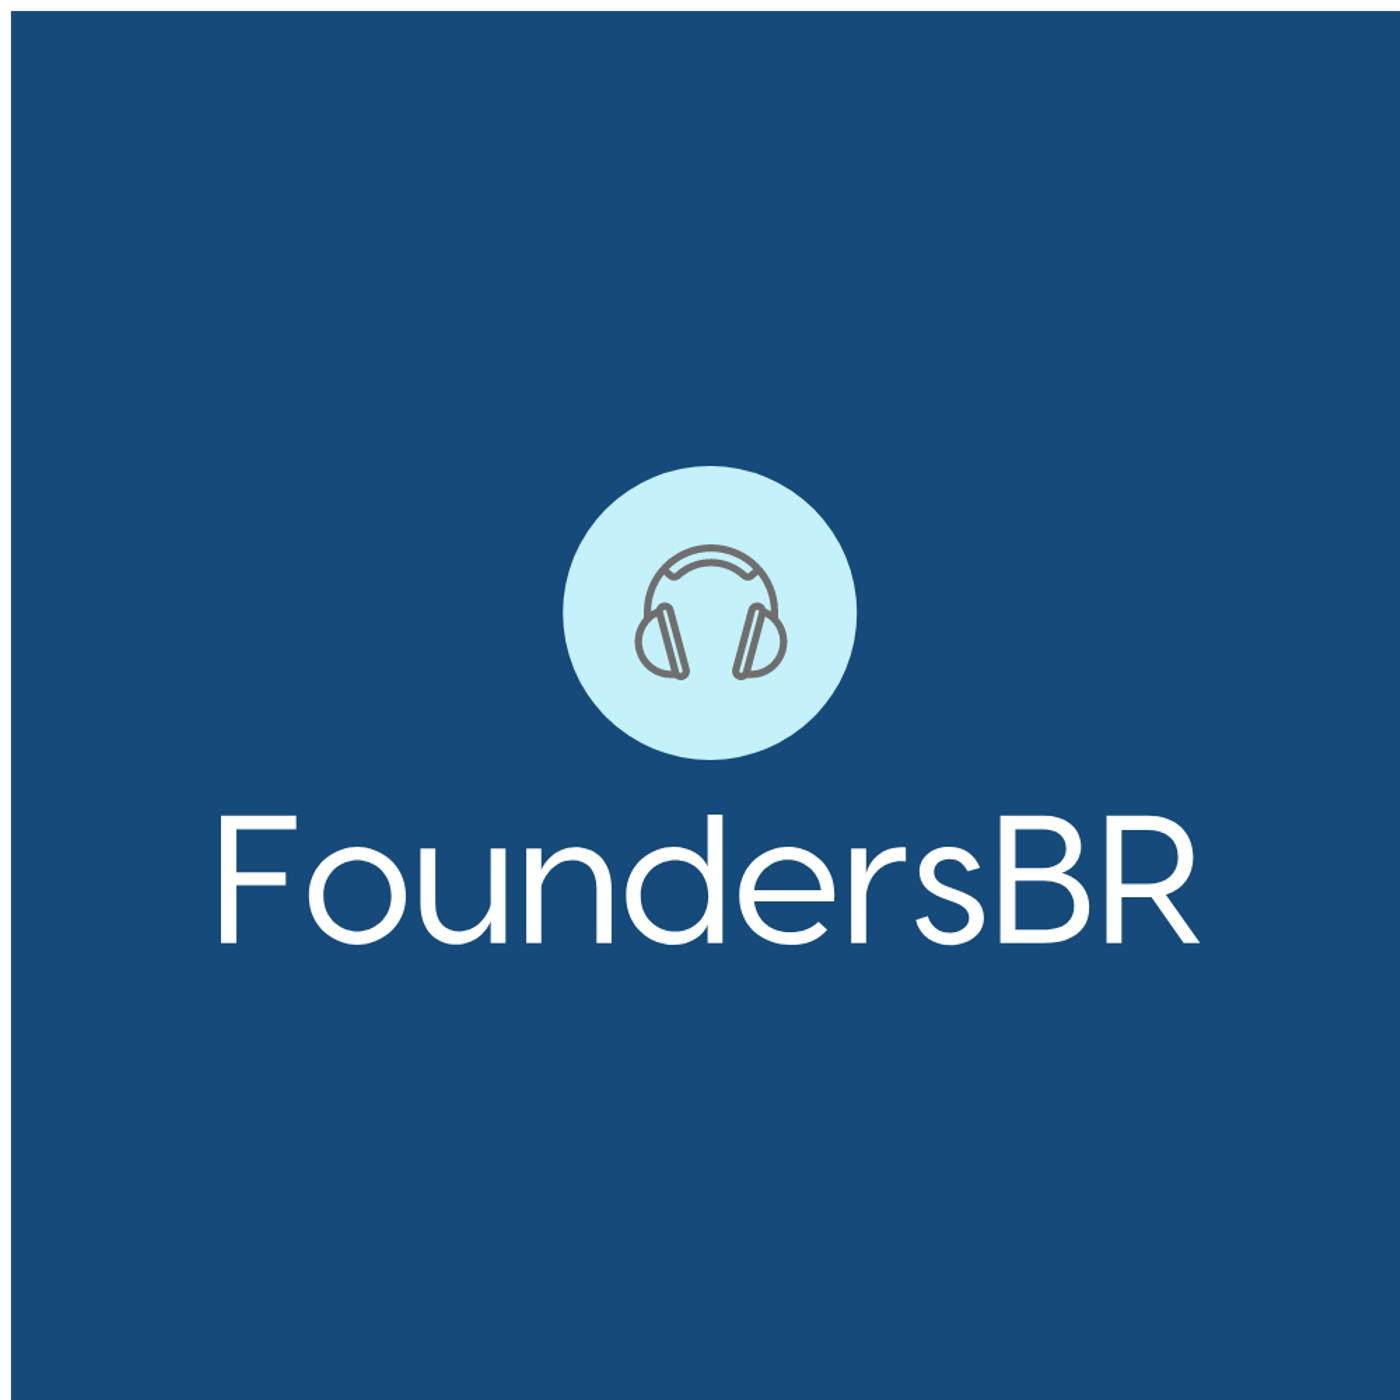 FoundersBR